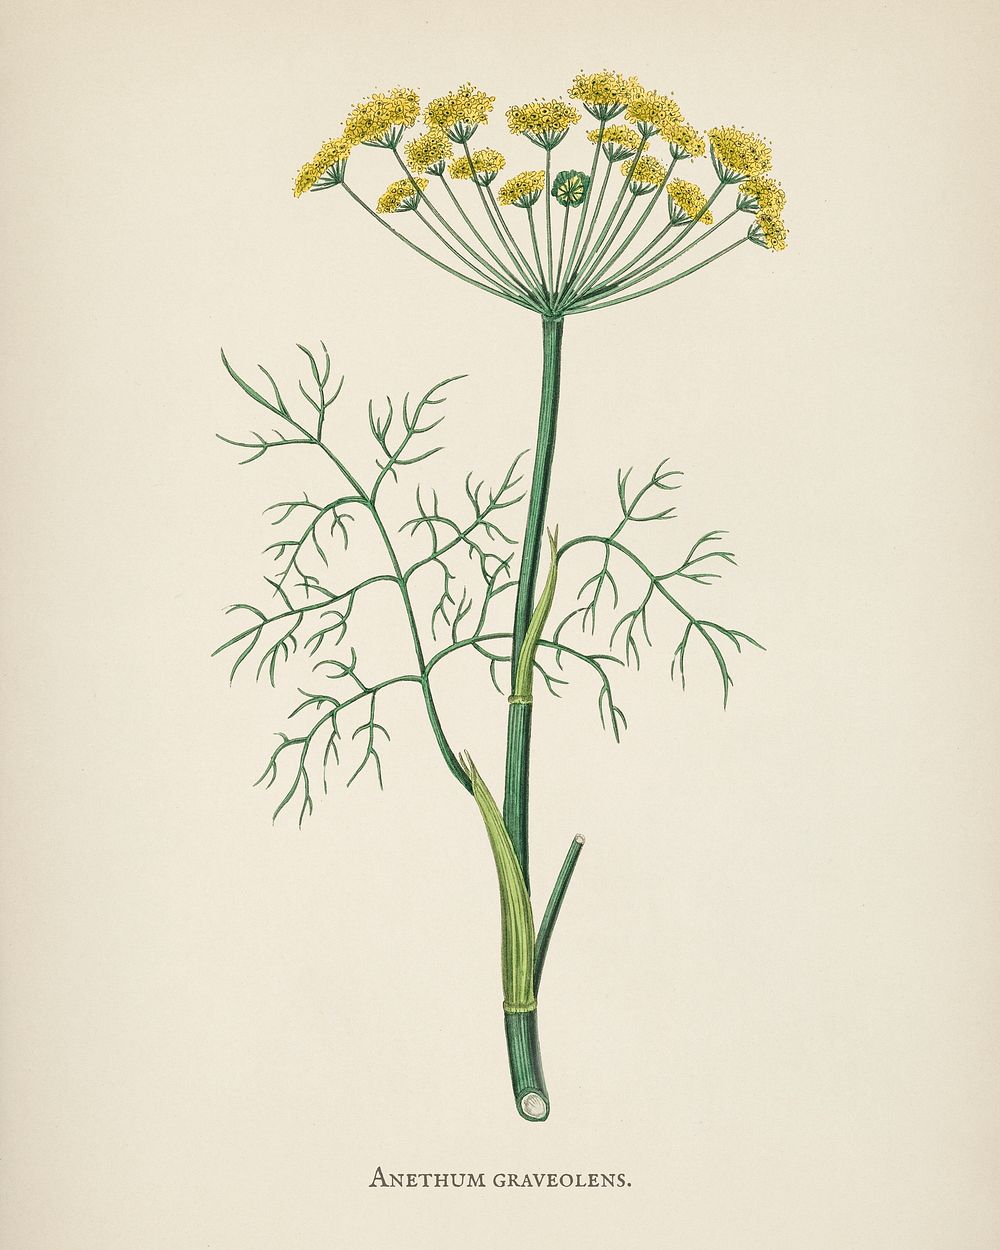 Dill (Anethum graveolens) illustration from Medical Botany (1836) by John Stephenson and James Morss Churchill.